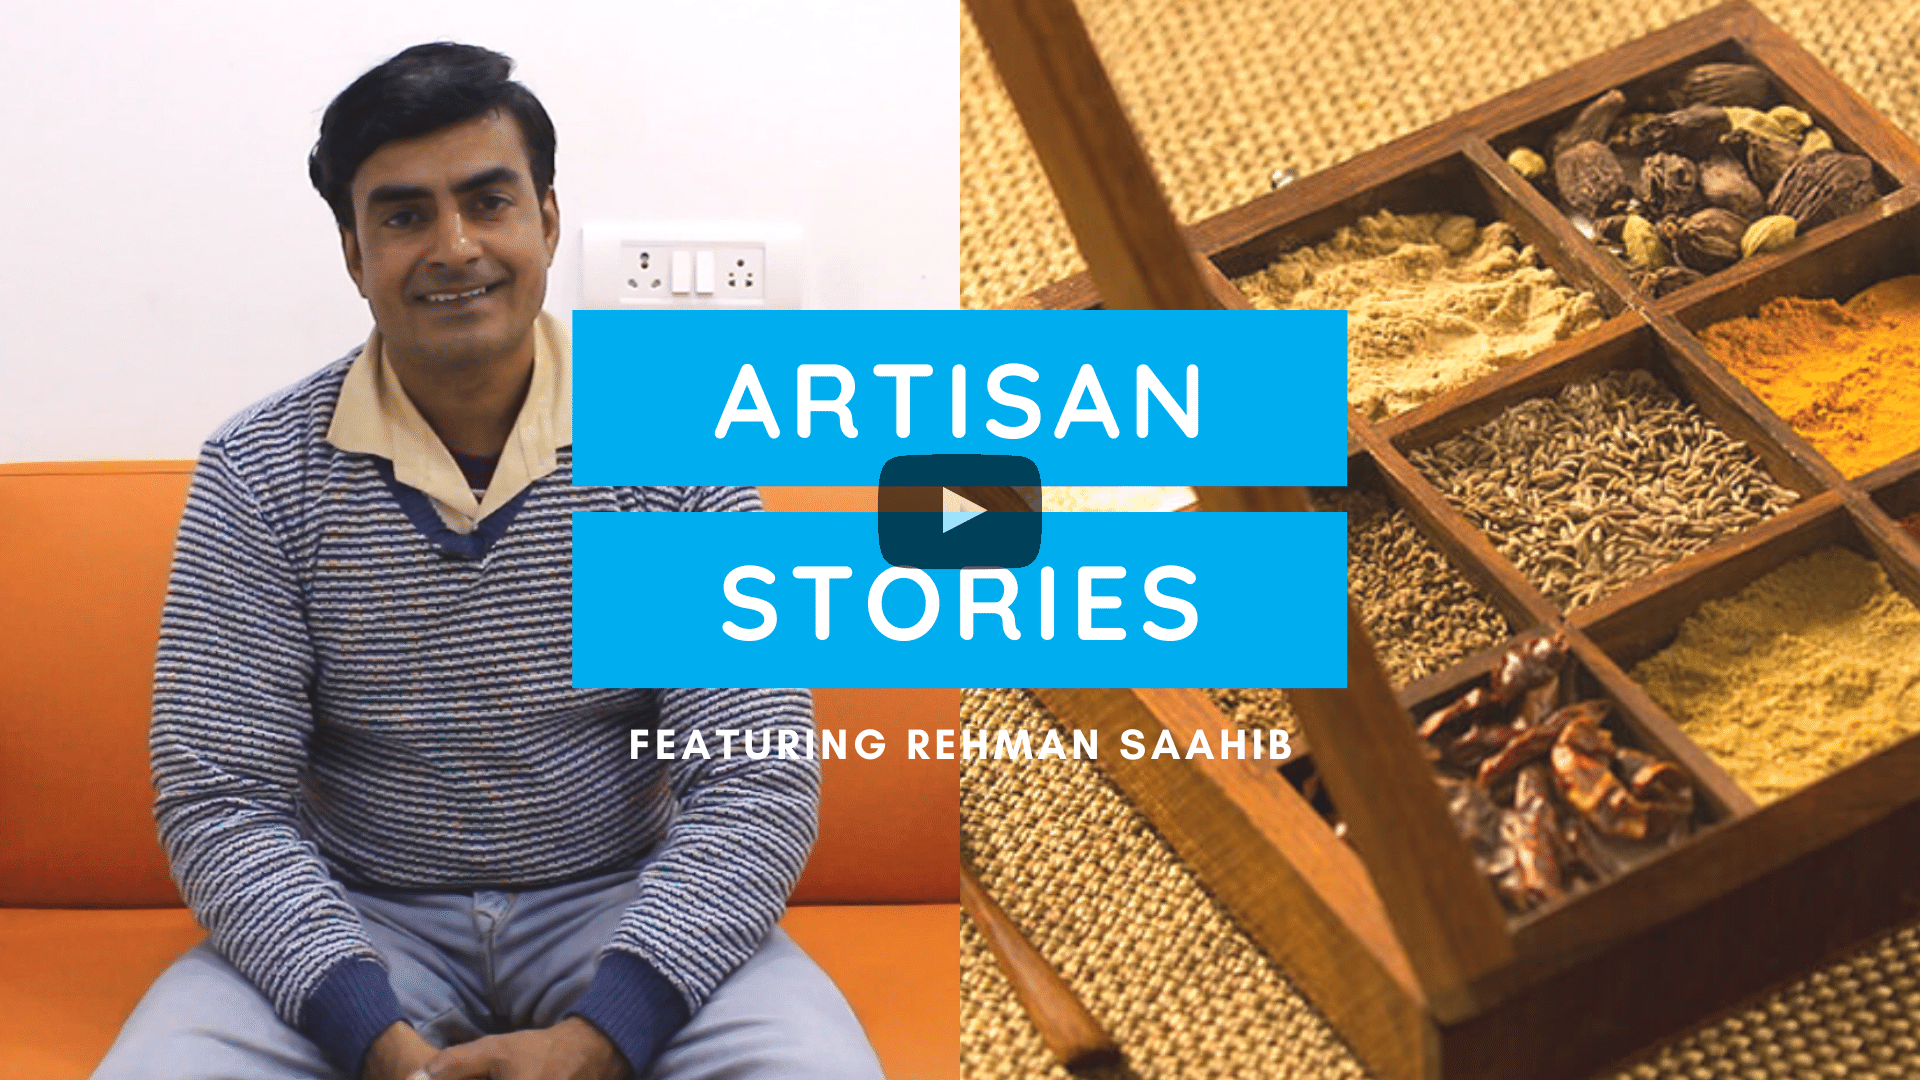 Artisan Stories by ExclusiveLane- Meet Rahman Sahib